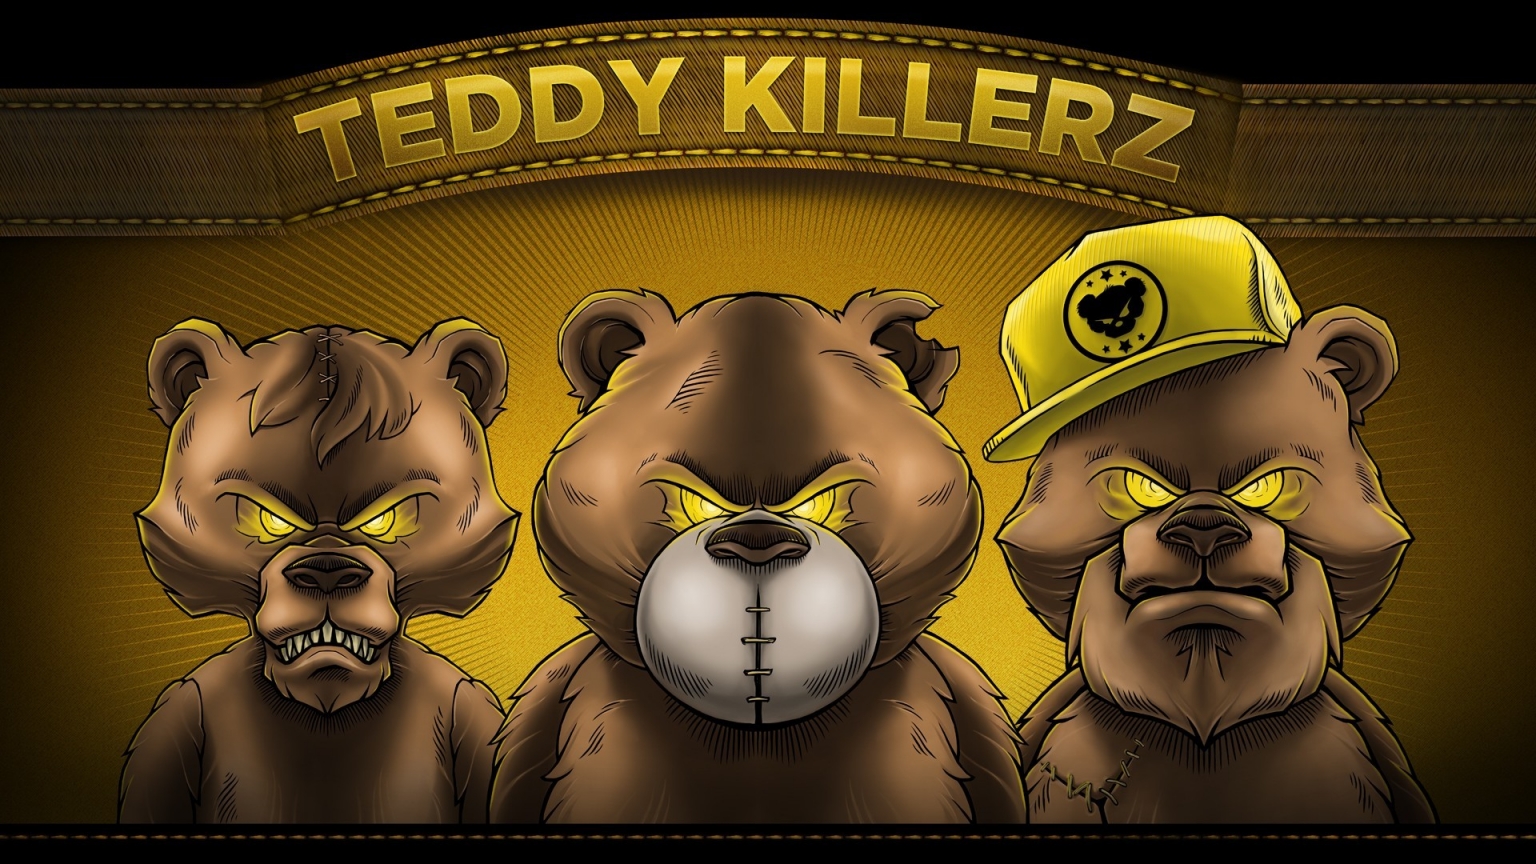 Teddy Killerz Poster for 1536 x 864 HDTV resolution